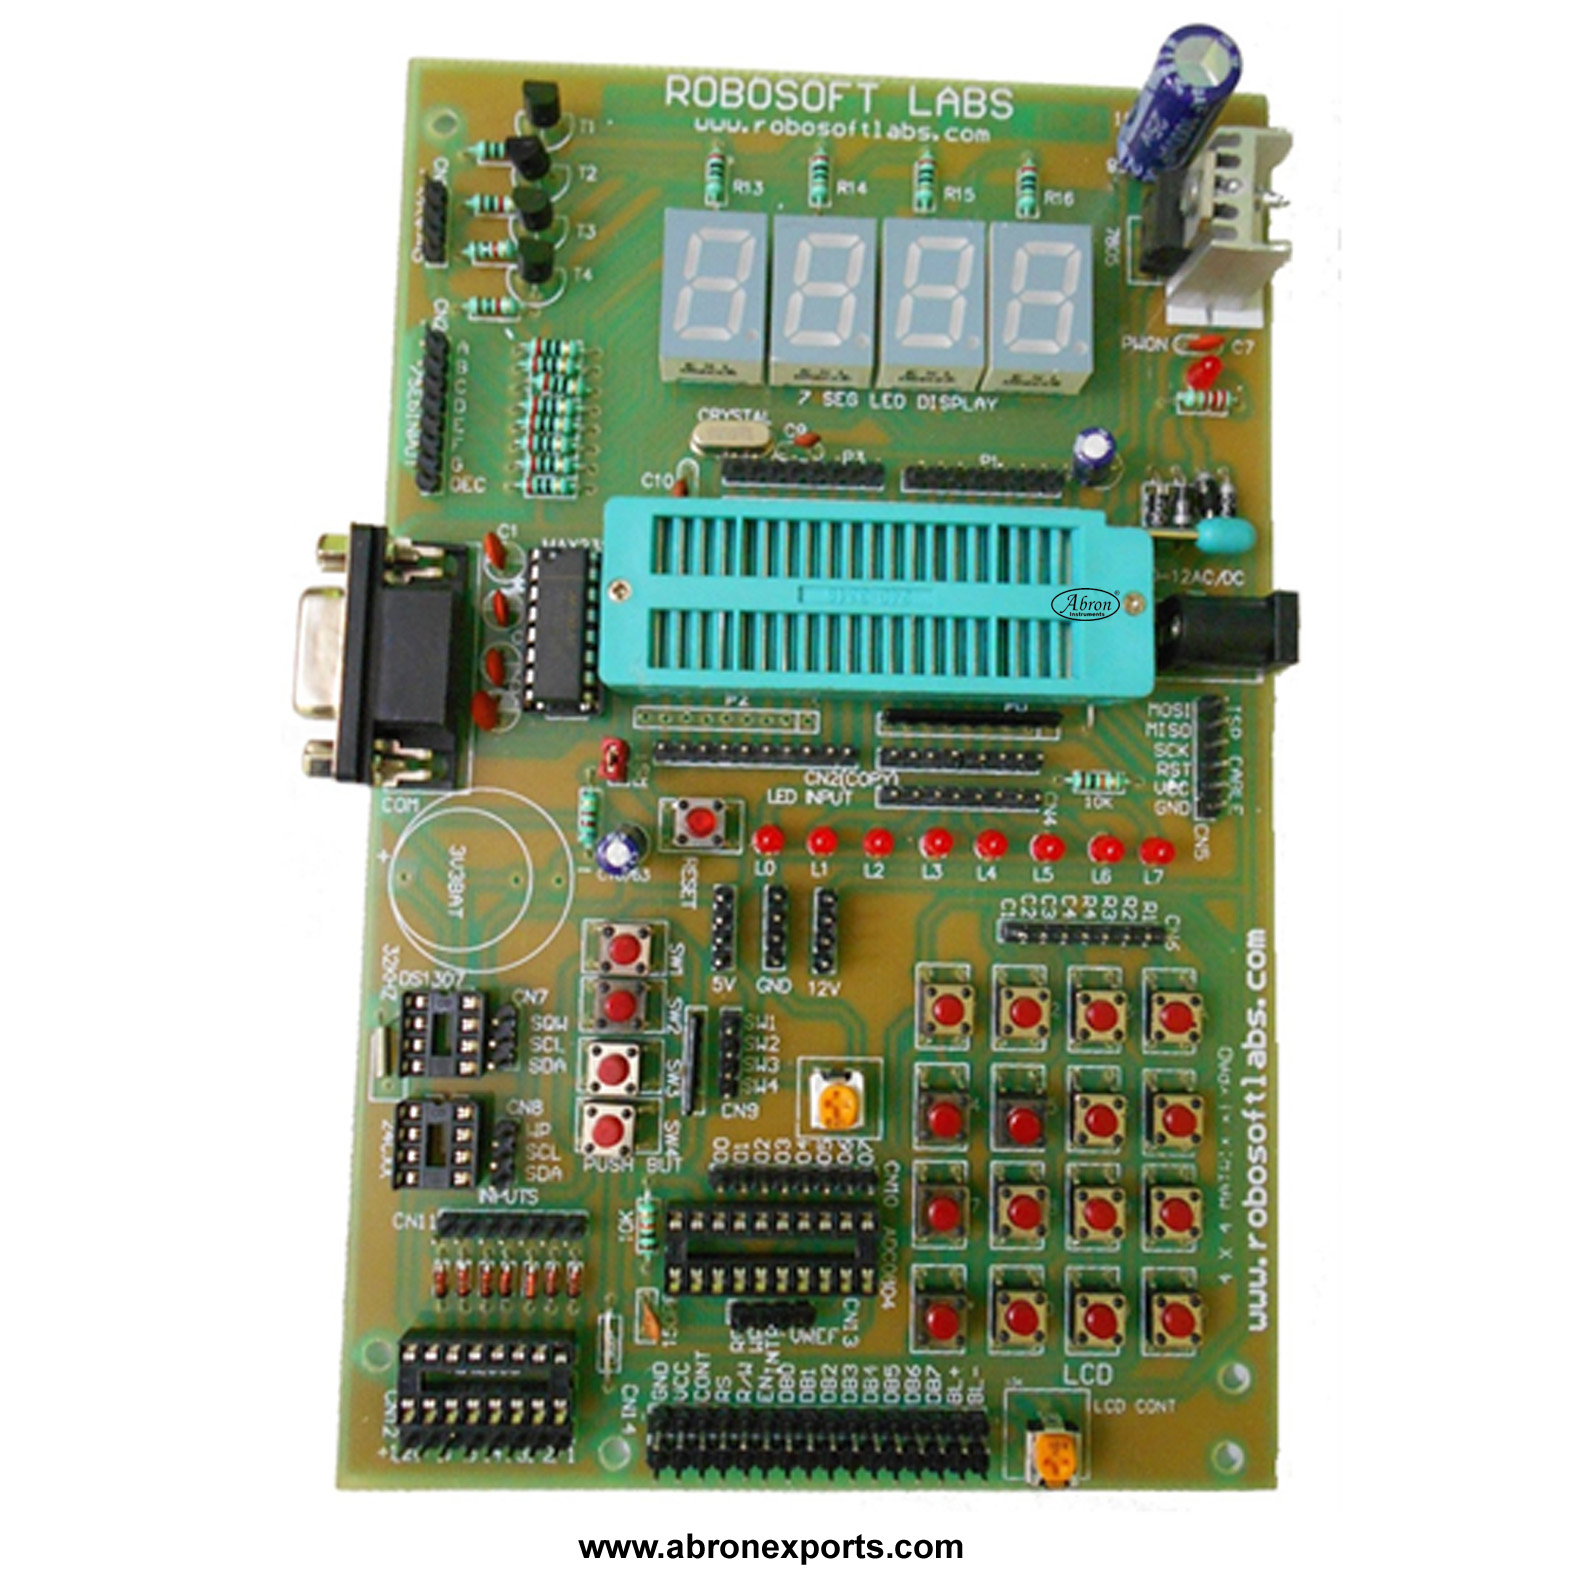 Microcontroller rob soft labs abron AE-1306rc